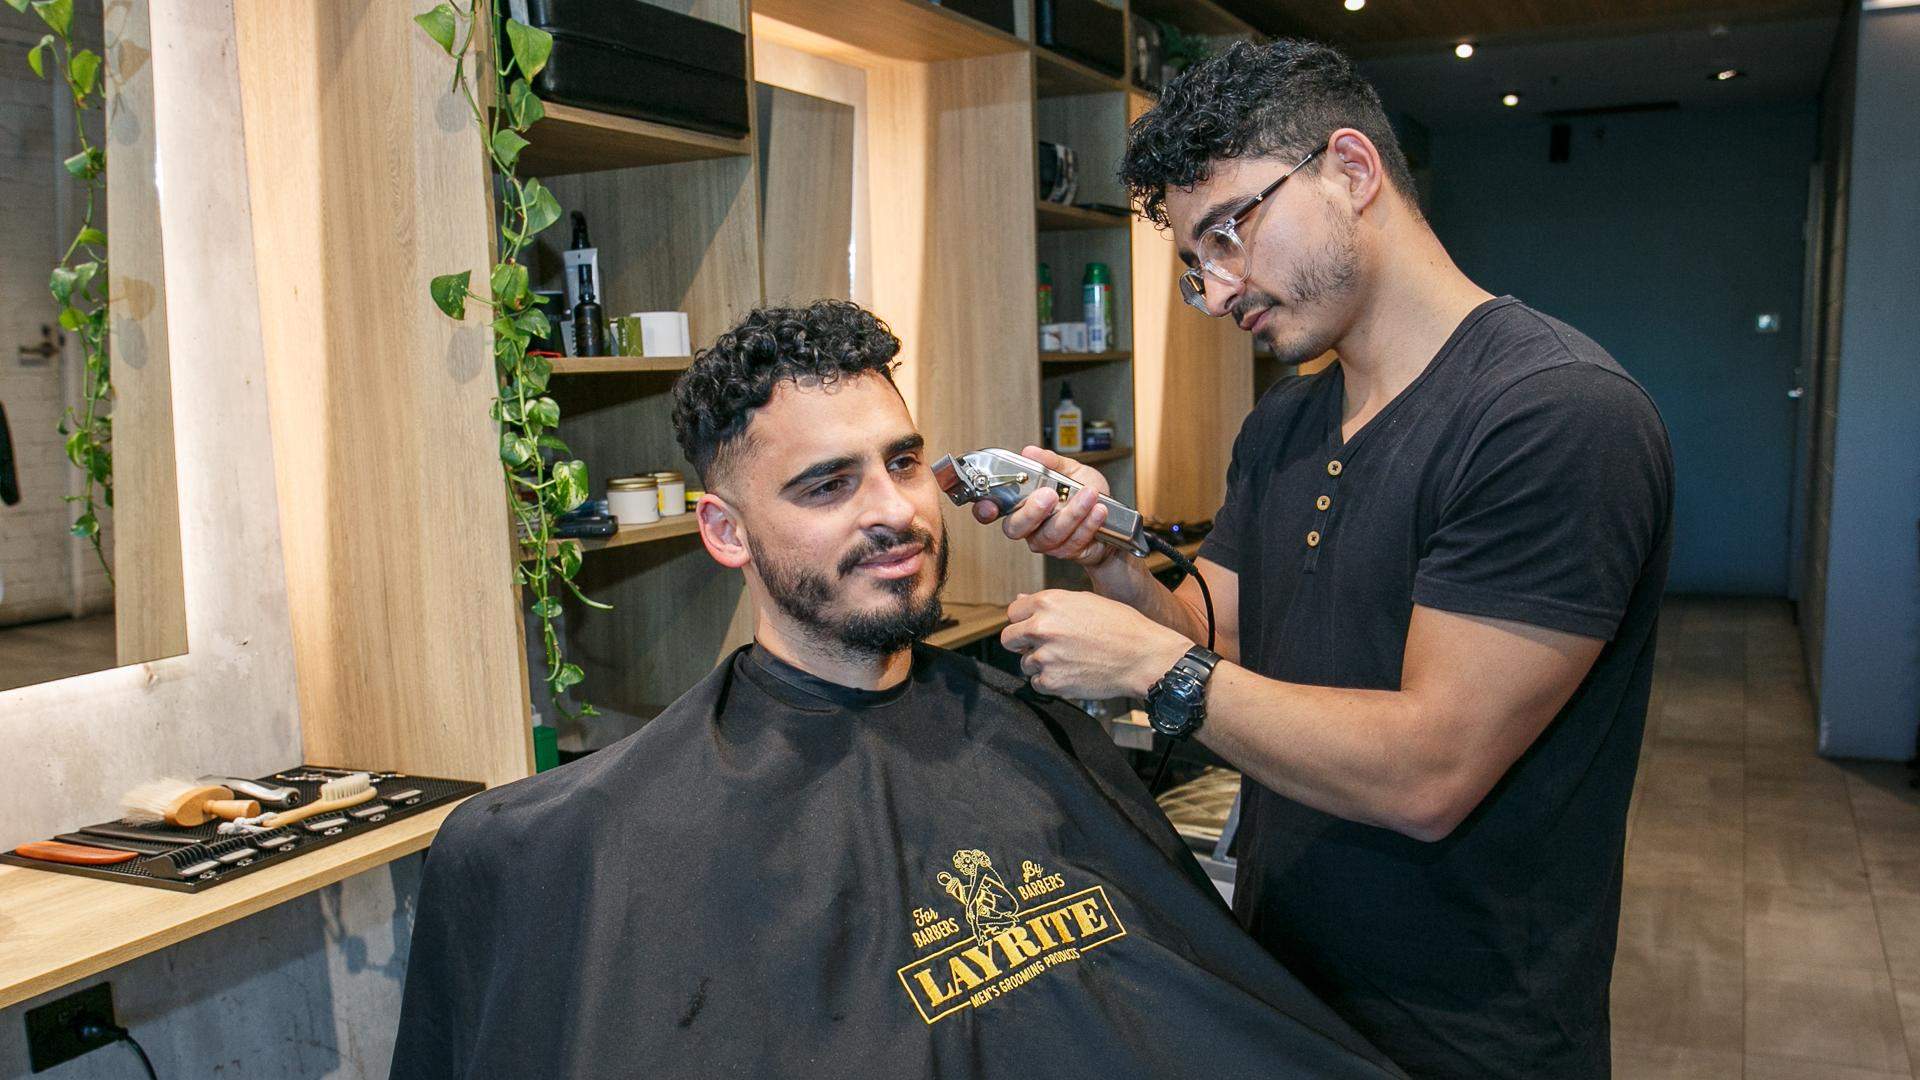 Barber cutting a customer's hair